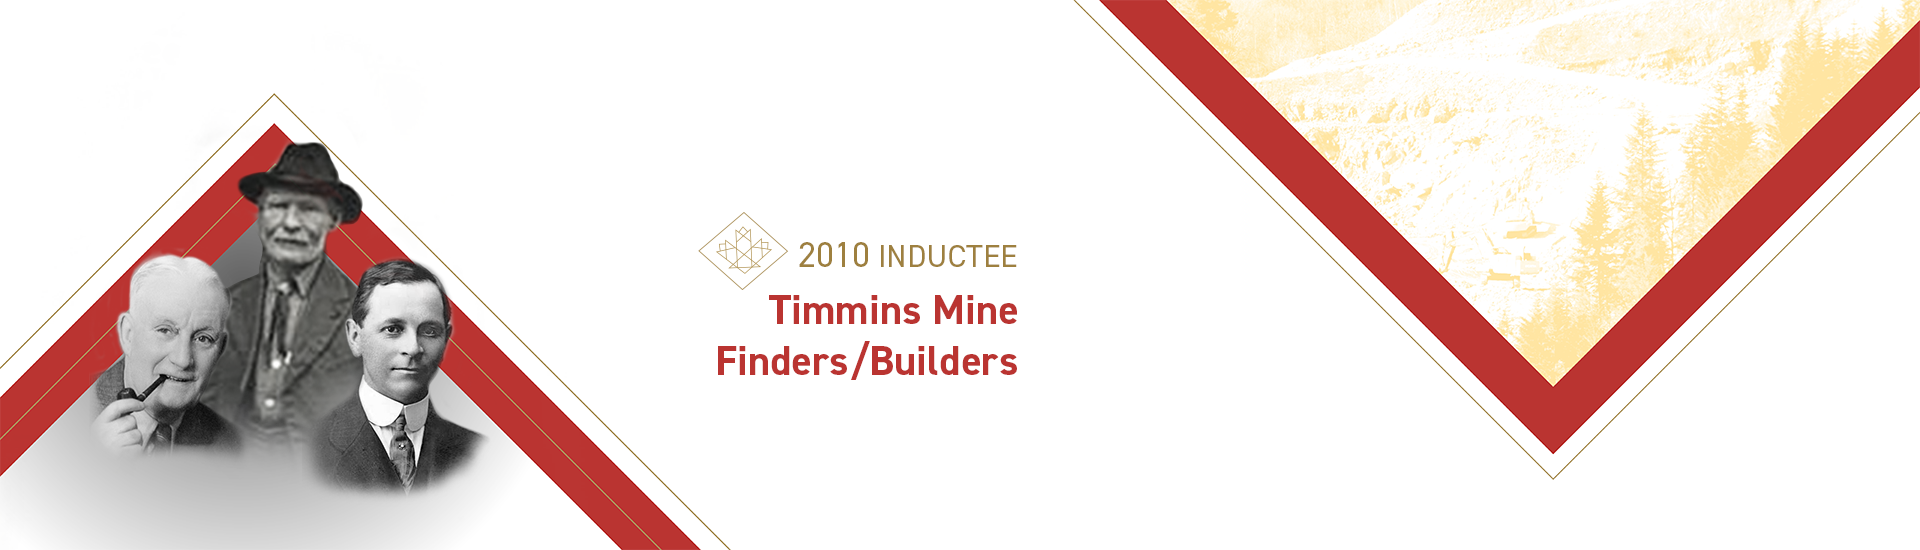 Timmins Mine Finders / Builders